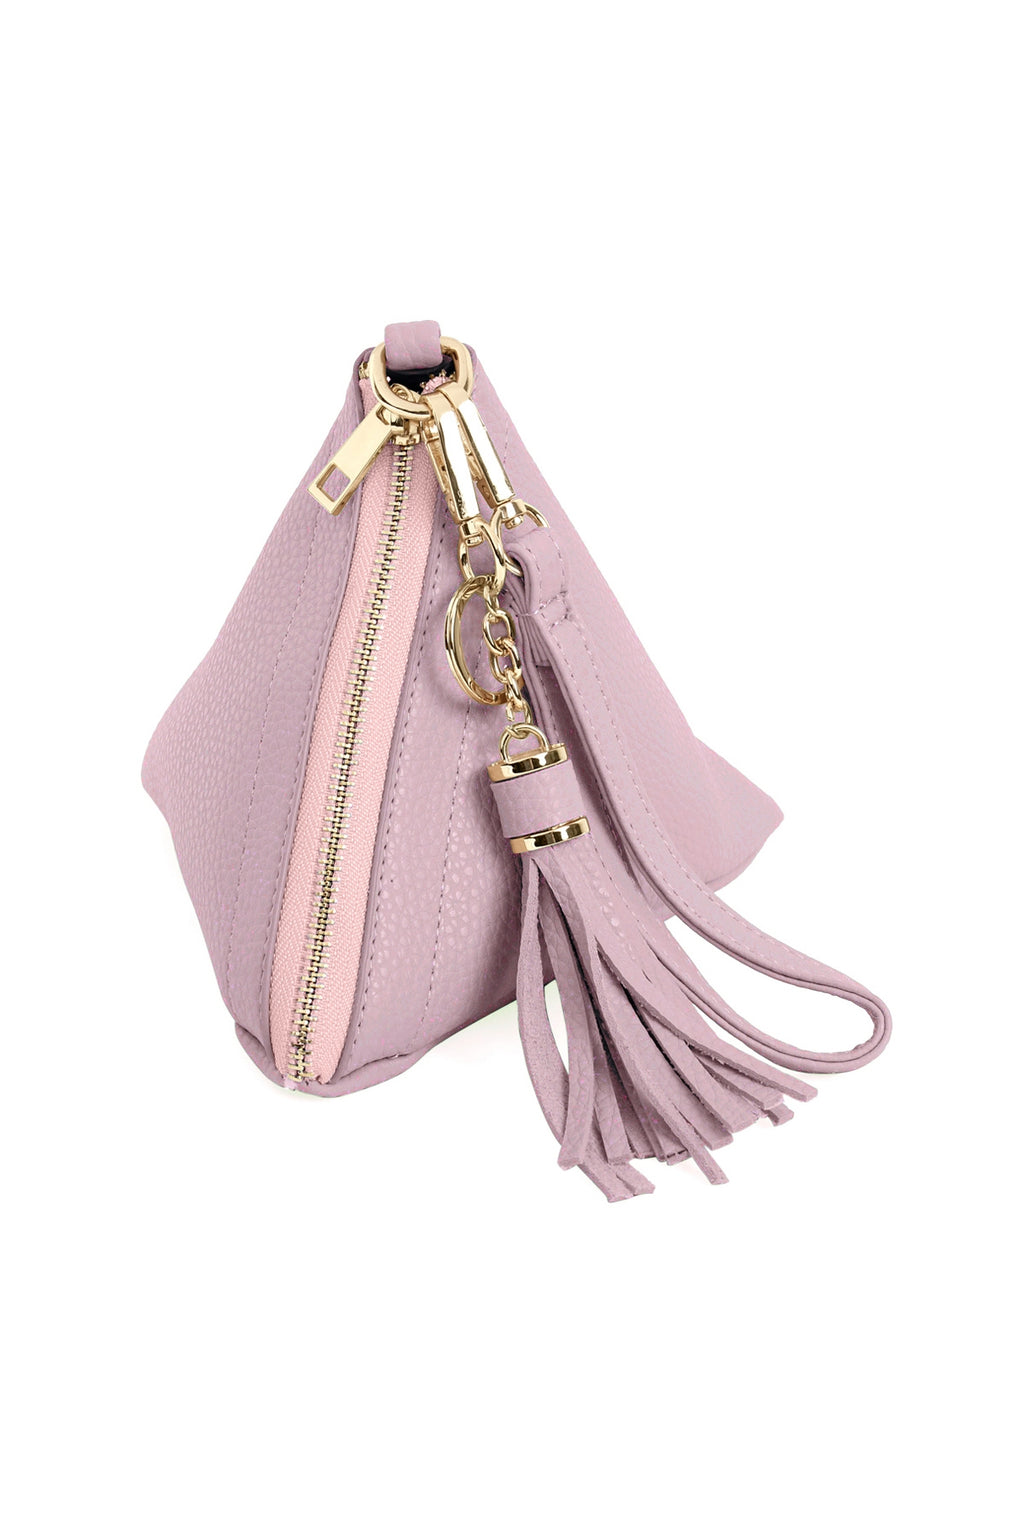 Pyramid Shape Leather Wristlet Bag Light Pink - Pack of 6